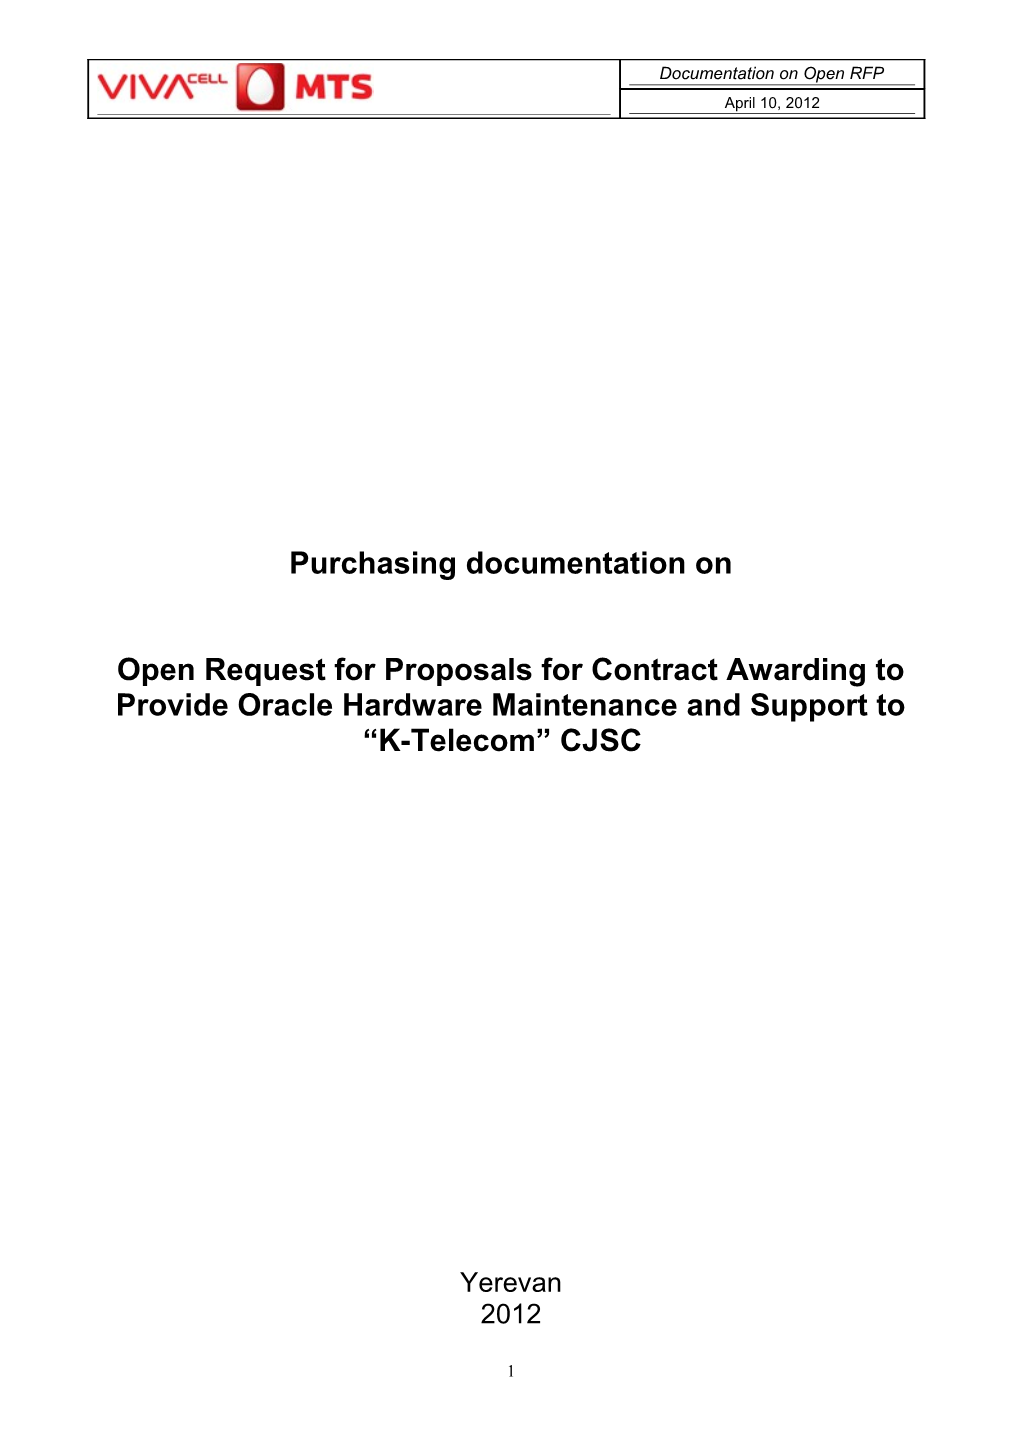 Purchasing Documentation On s1